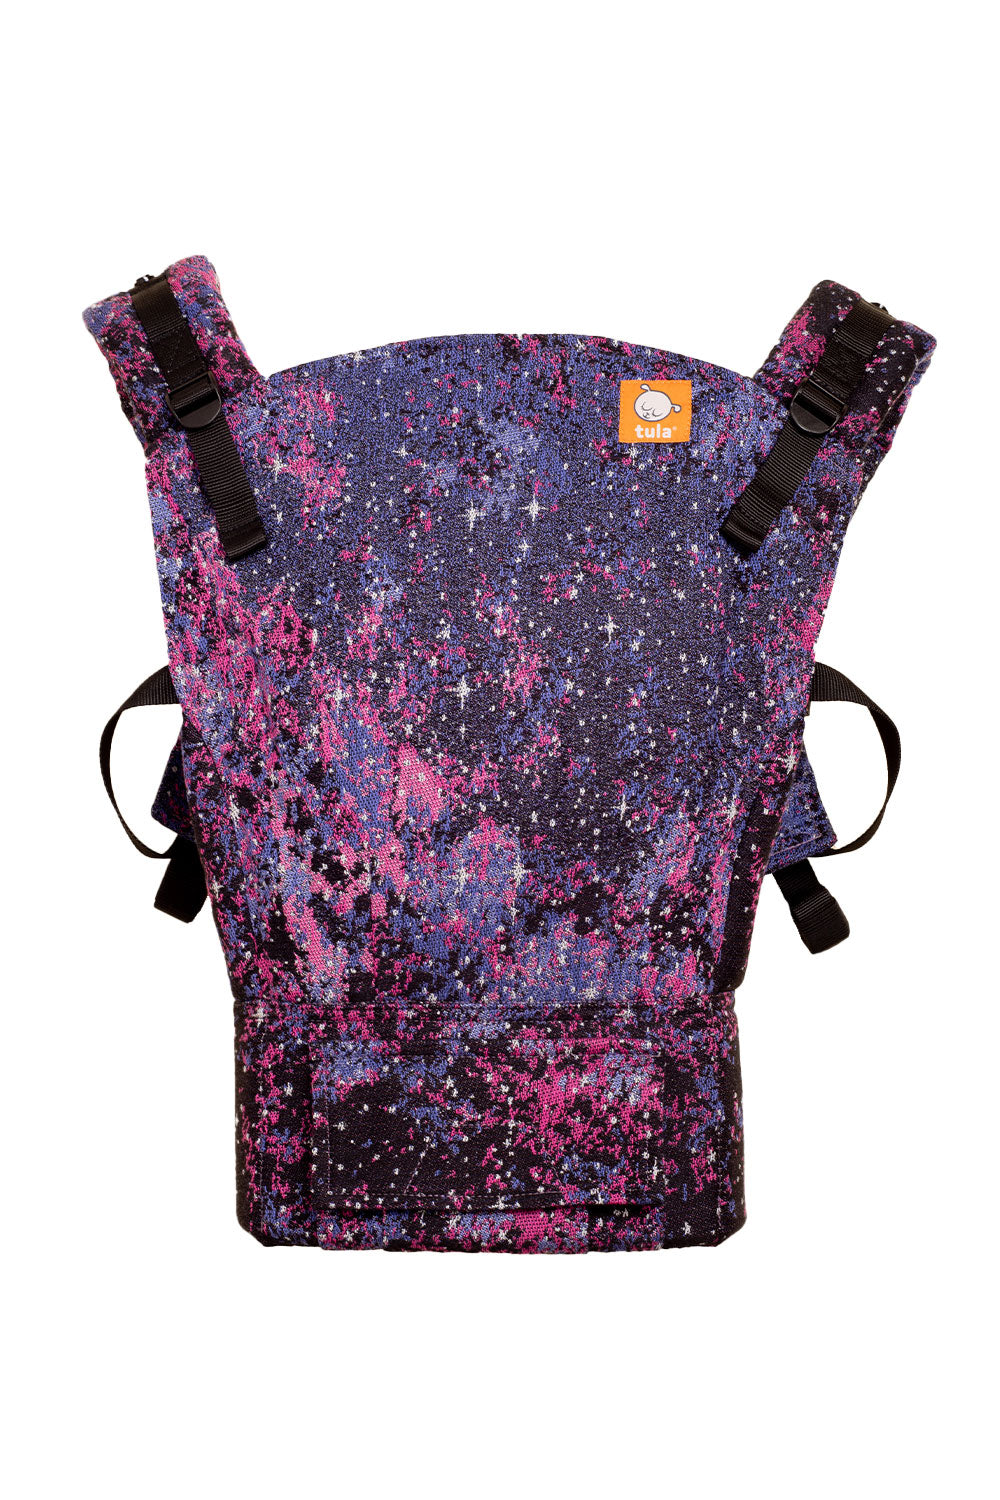 Nebula - Signature Woven Standard Baby Carrier